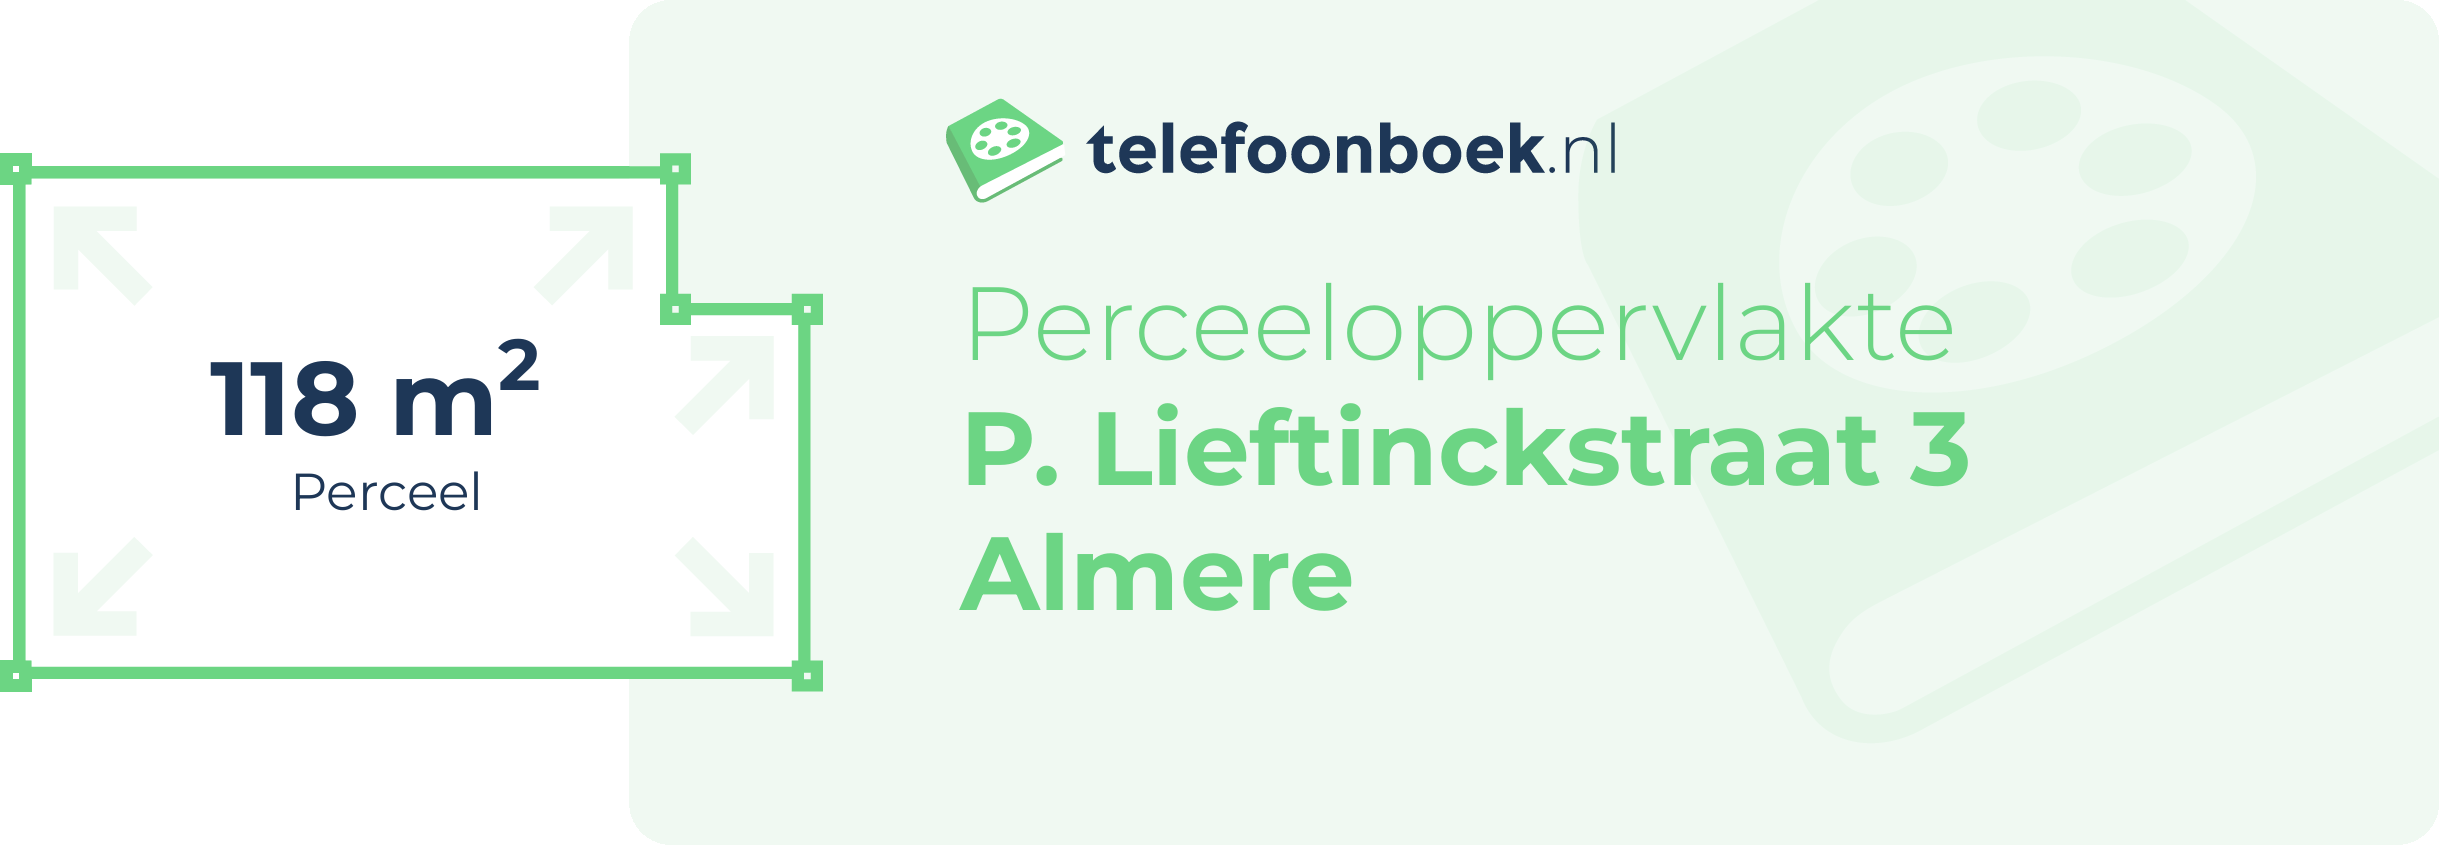 Perceeloppervlakte P. Lieftinckstraat 3 Almere